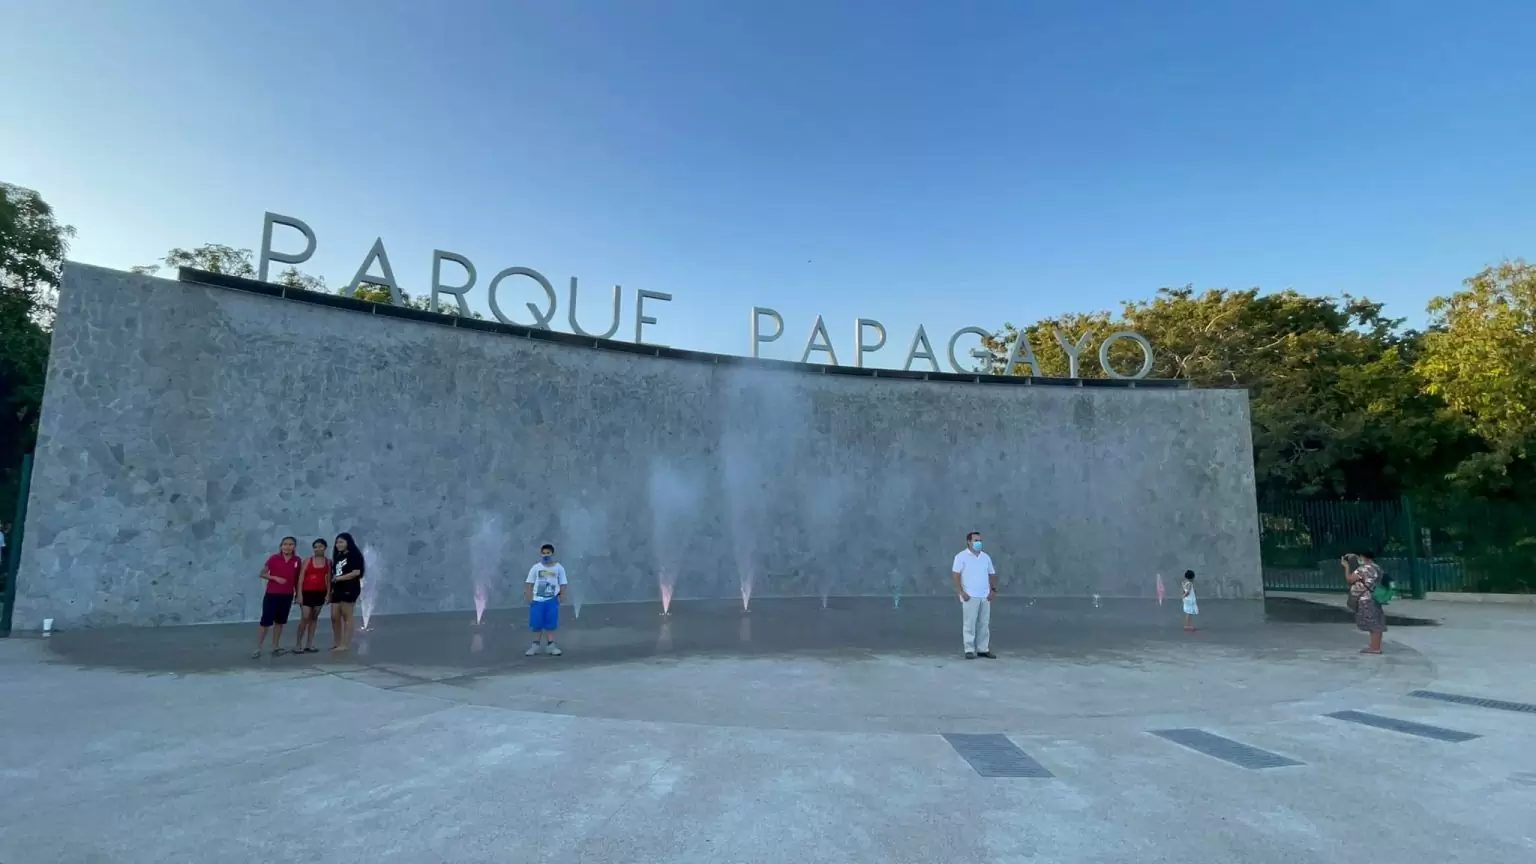 Visit the Parque Papagayo